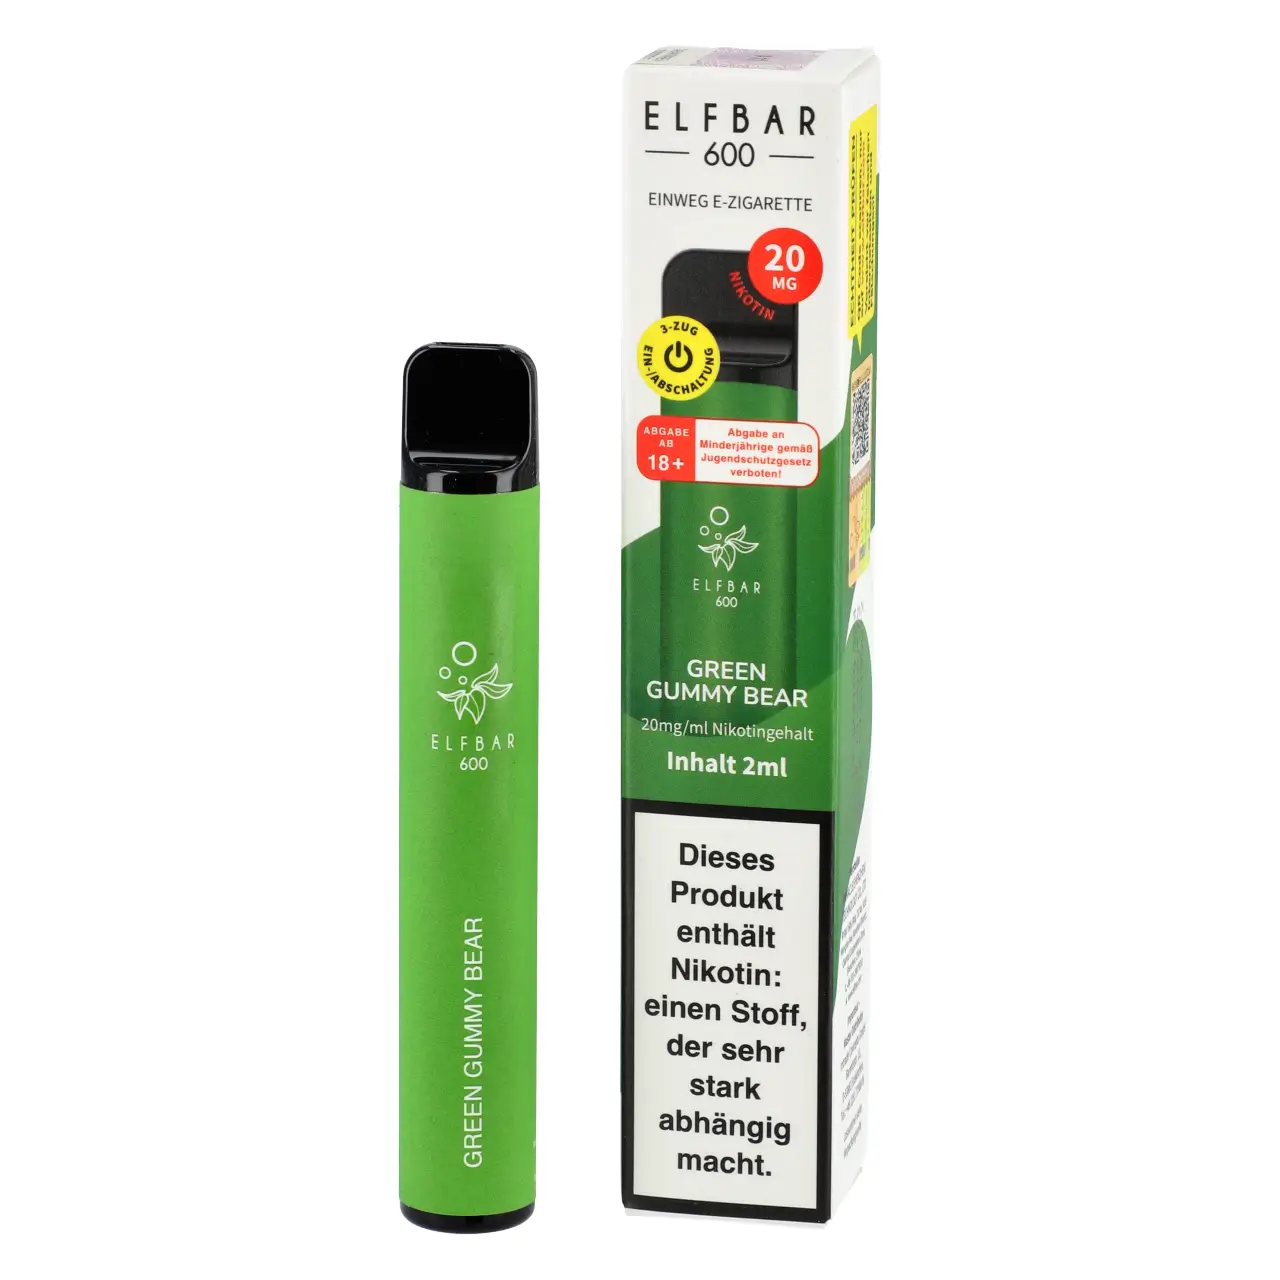 Green Gummy Bear - Elfbar 600 Einweg Vape